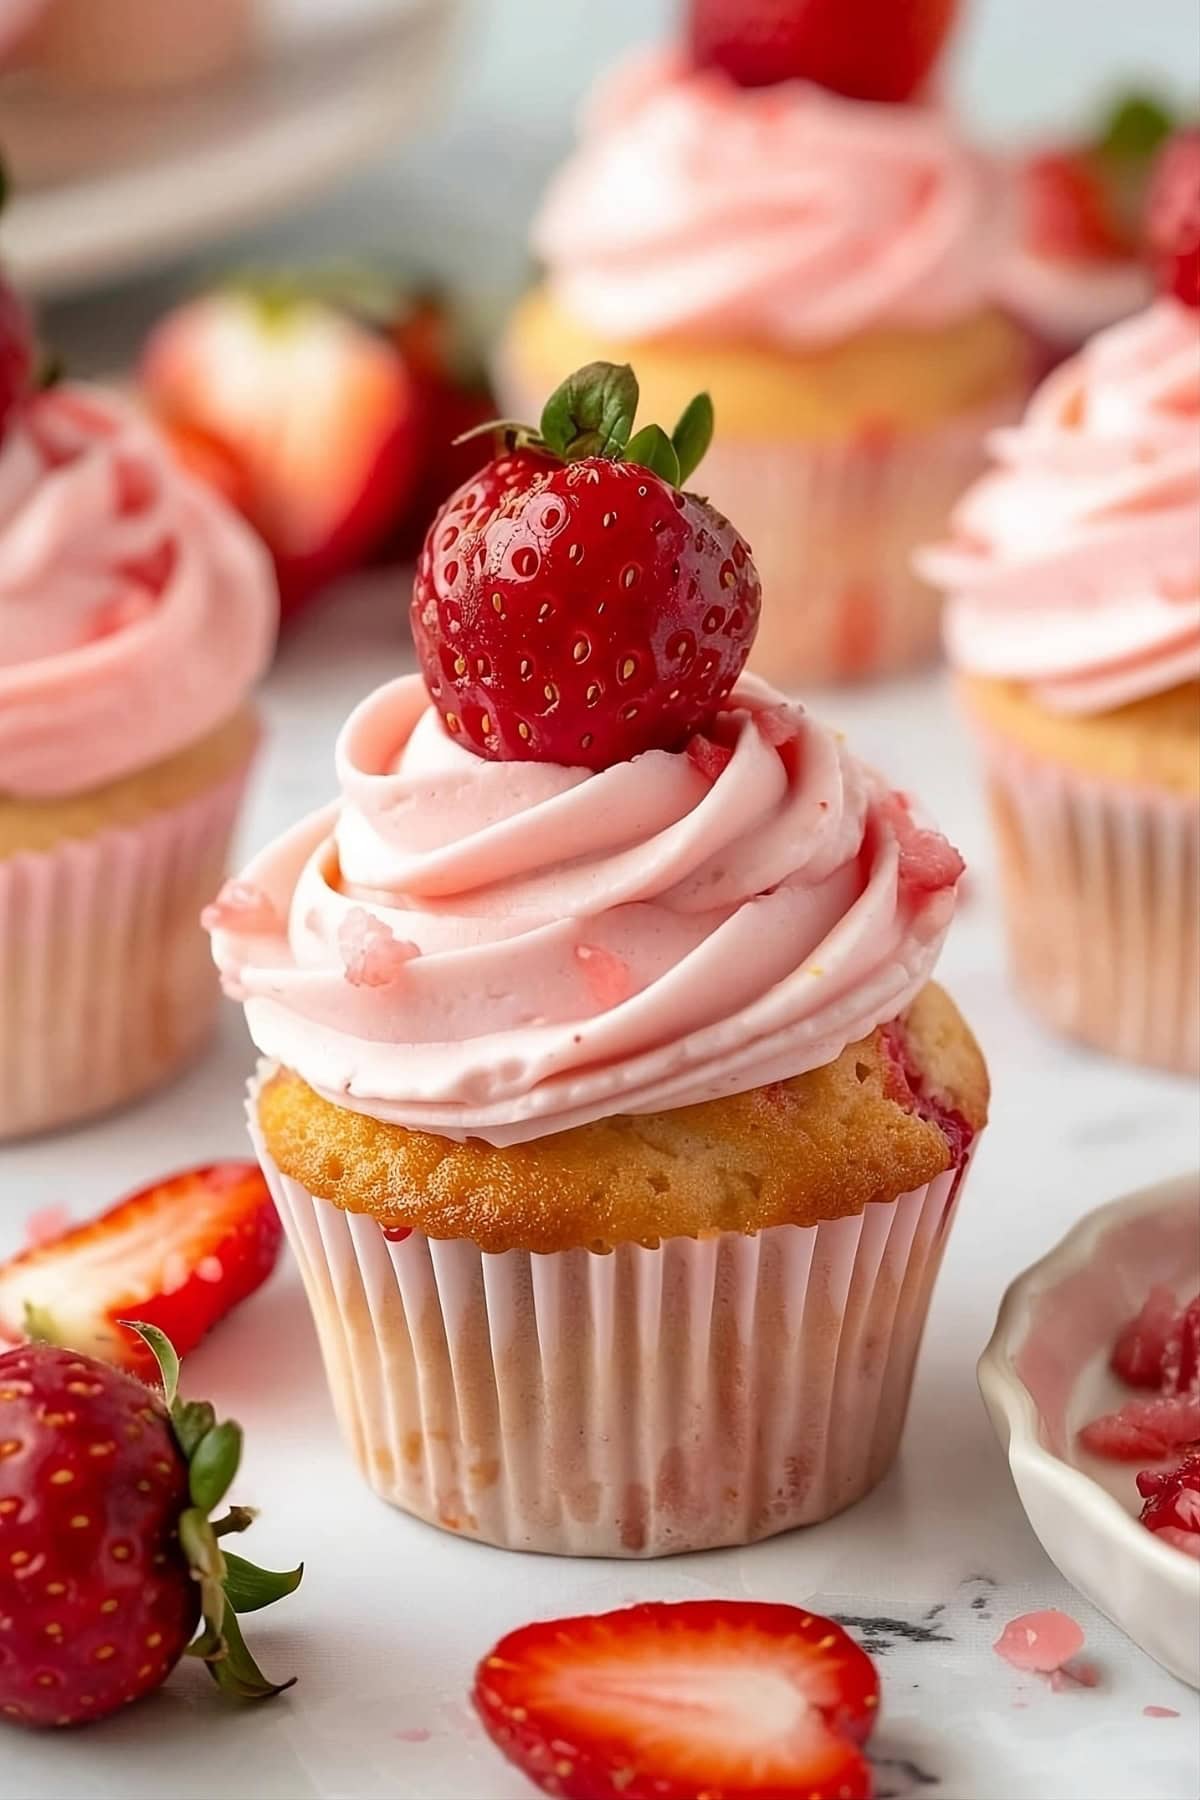 Strawberry cupcake with frosting and fresh strawberry garnish.